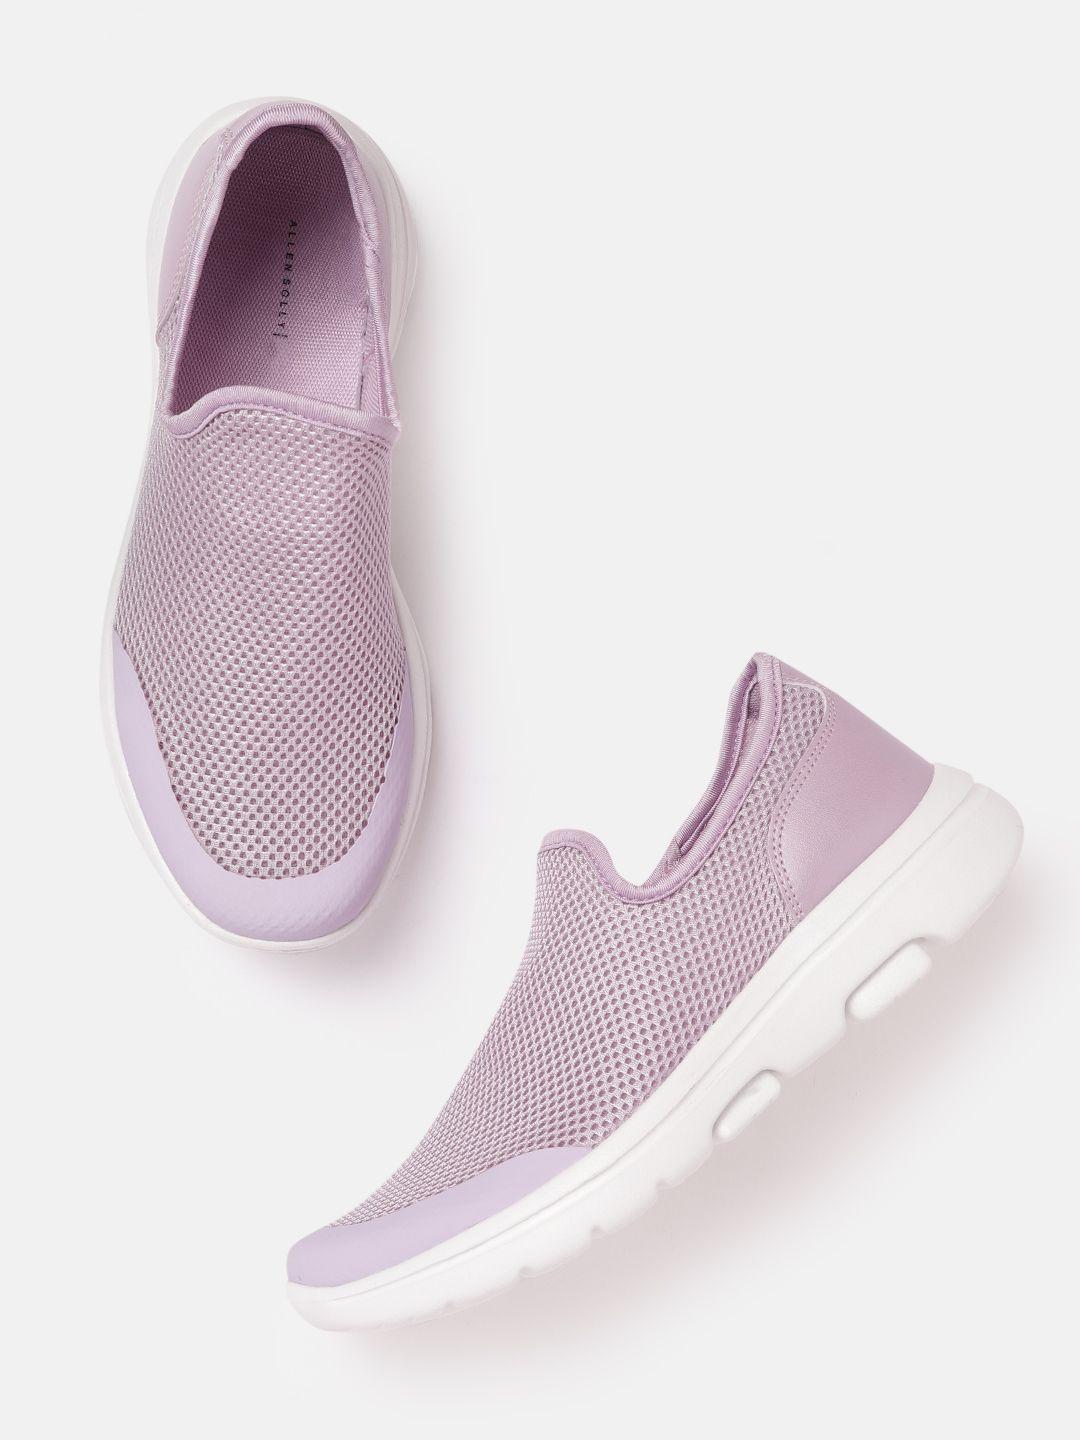 allen solly women lavender woven design slip-on sneakers